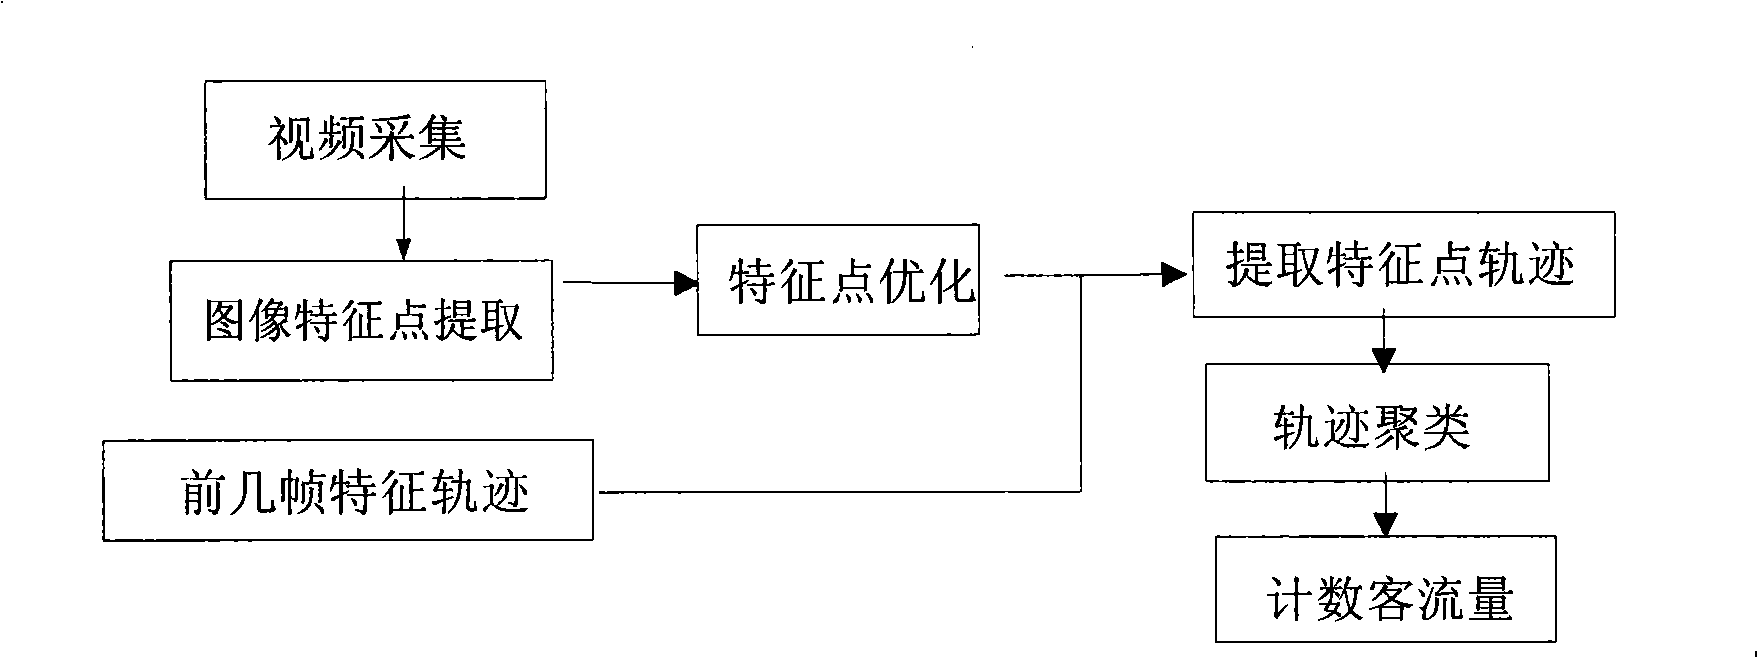 Passenger flow volume detection method and system based on computer vision